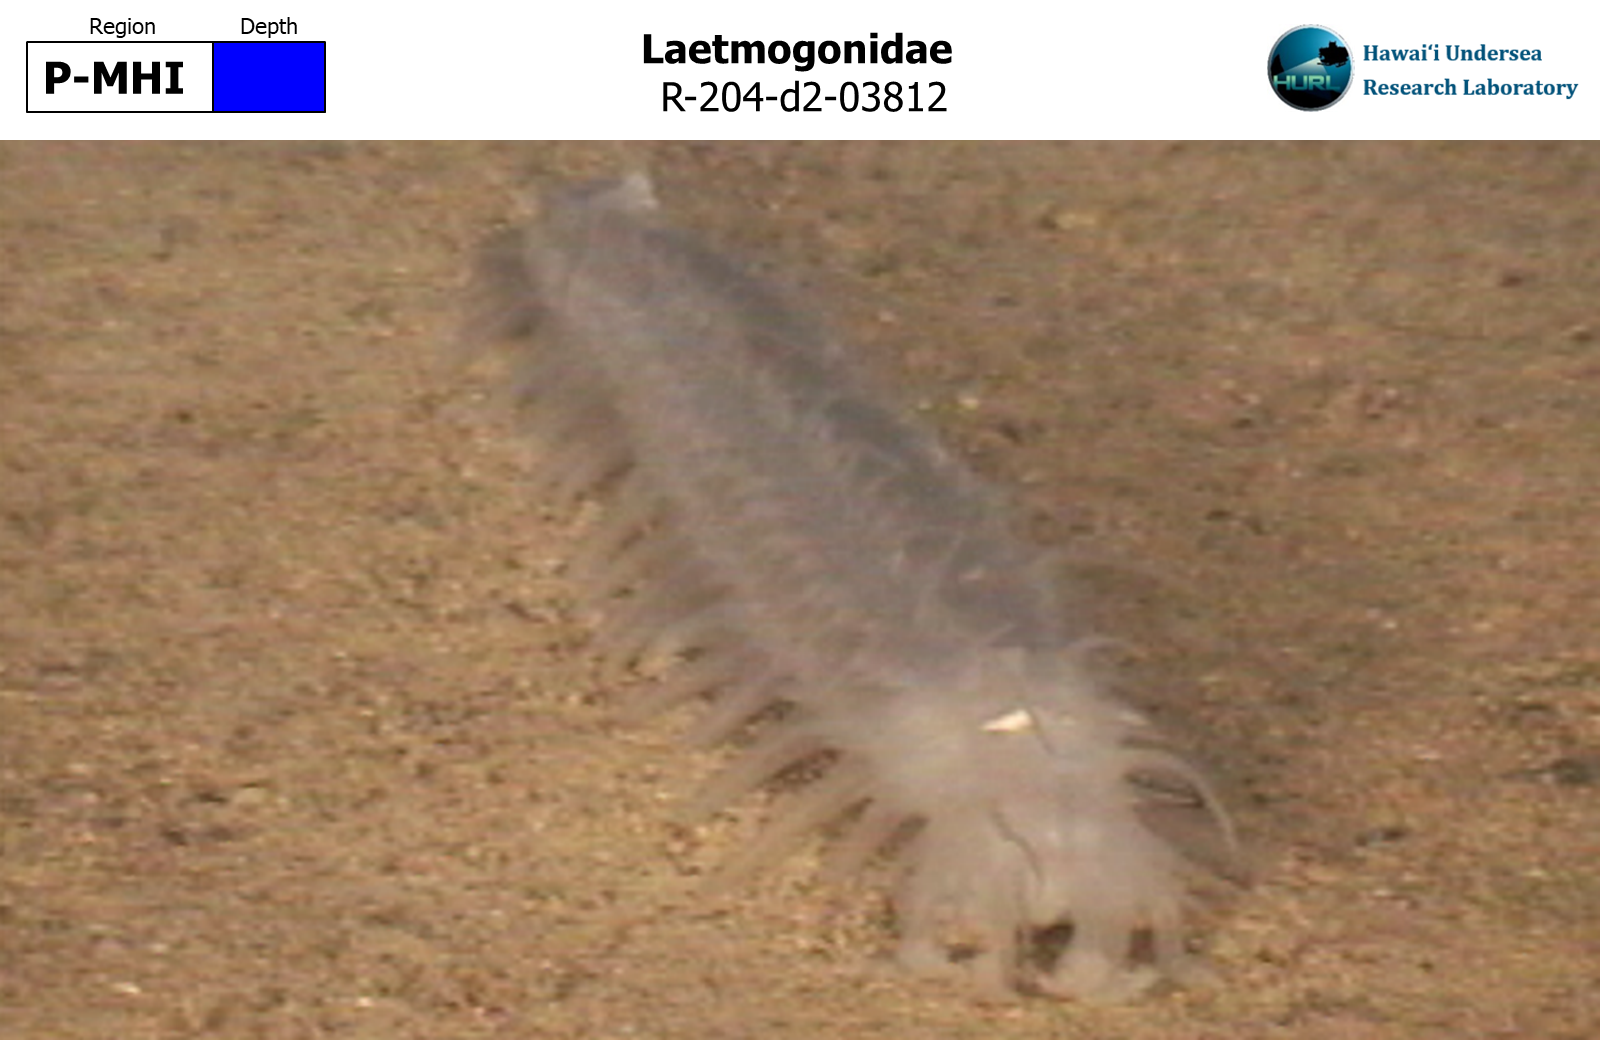 Laetmogonidae